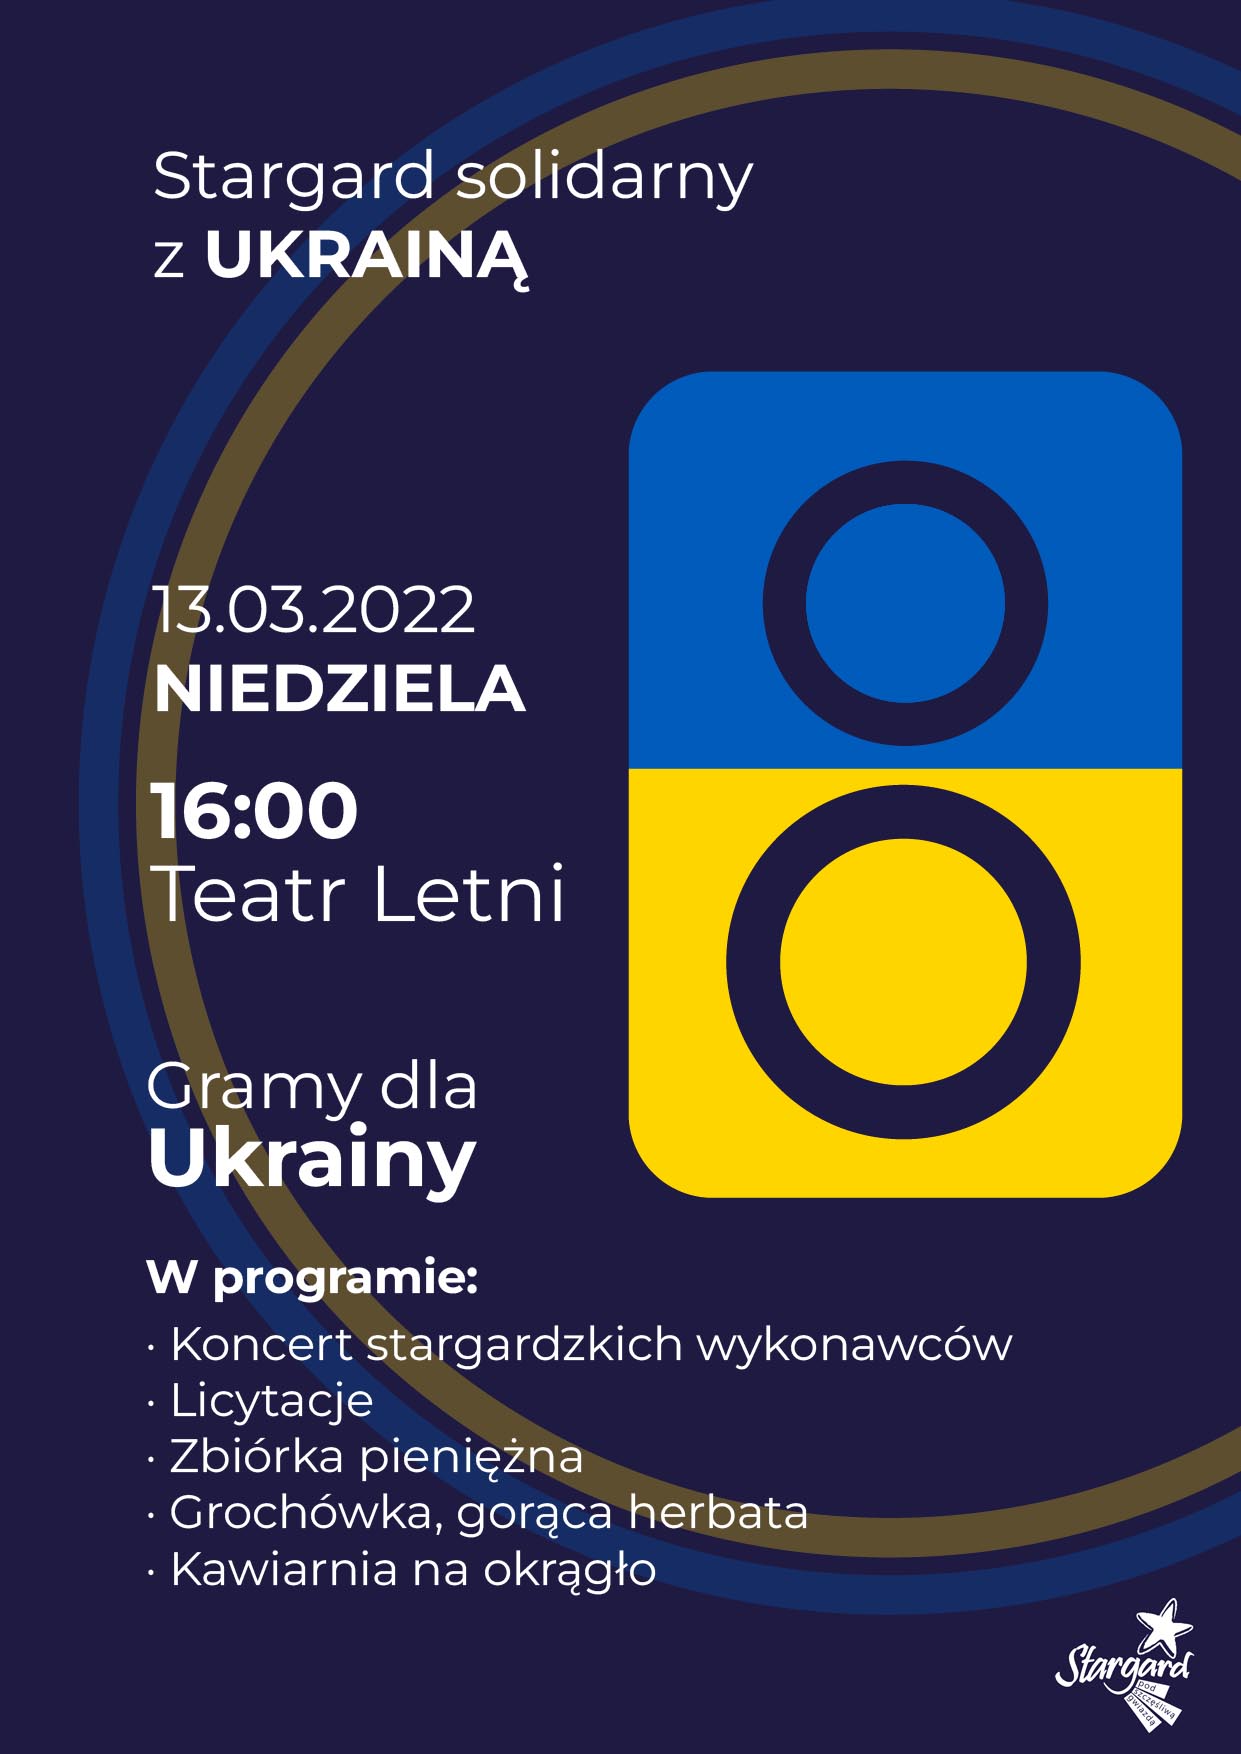 Stargard solidarny z Ukrainą, gramy dla Ukrainy